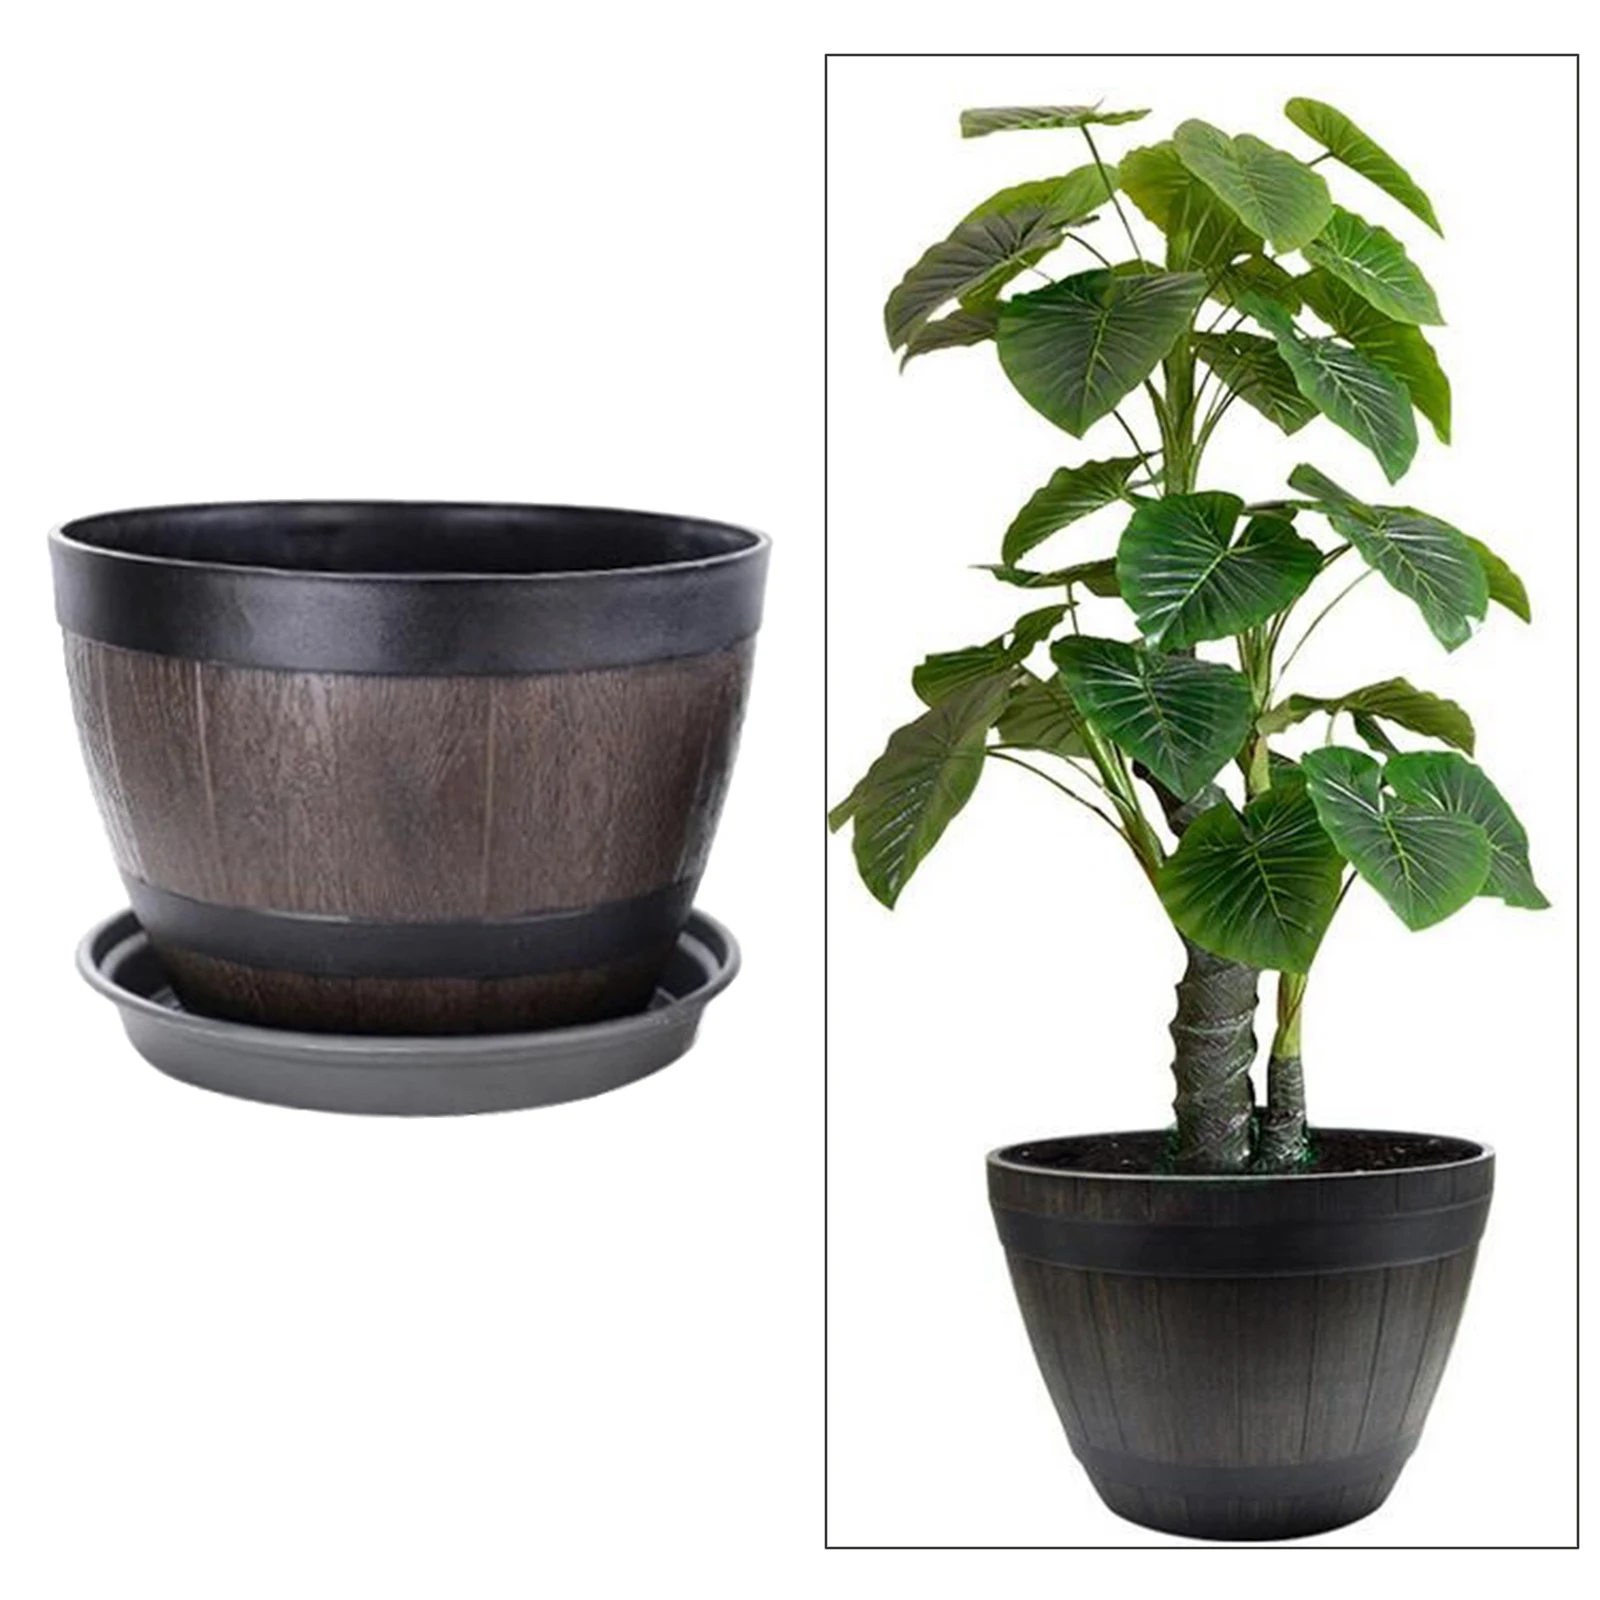 Retro Resin Barrel Flower Pot with Tray 12inch Indoor Garden Planter